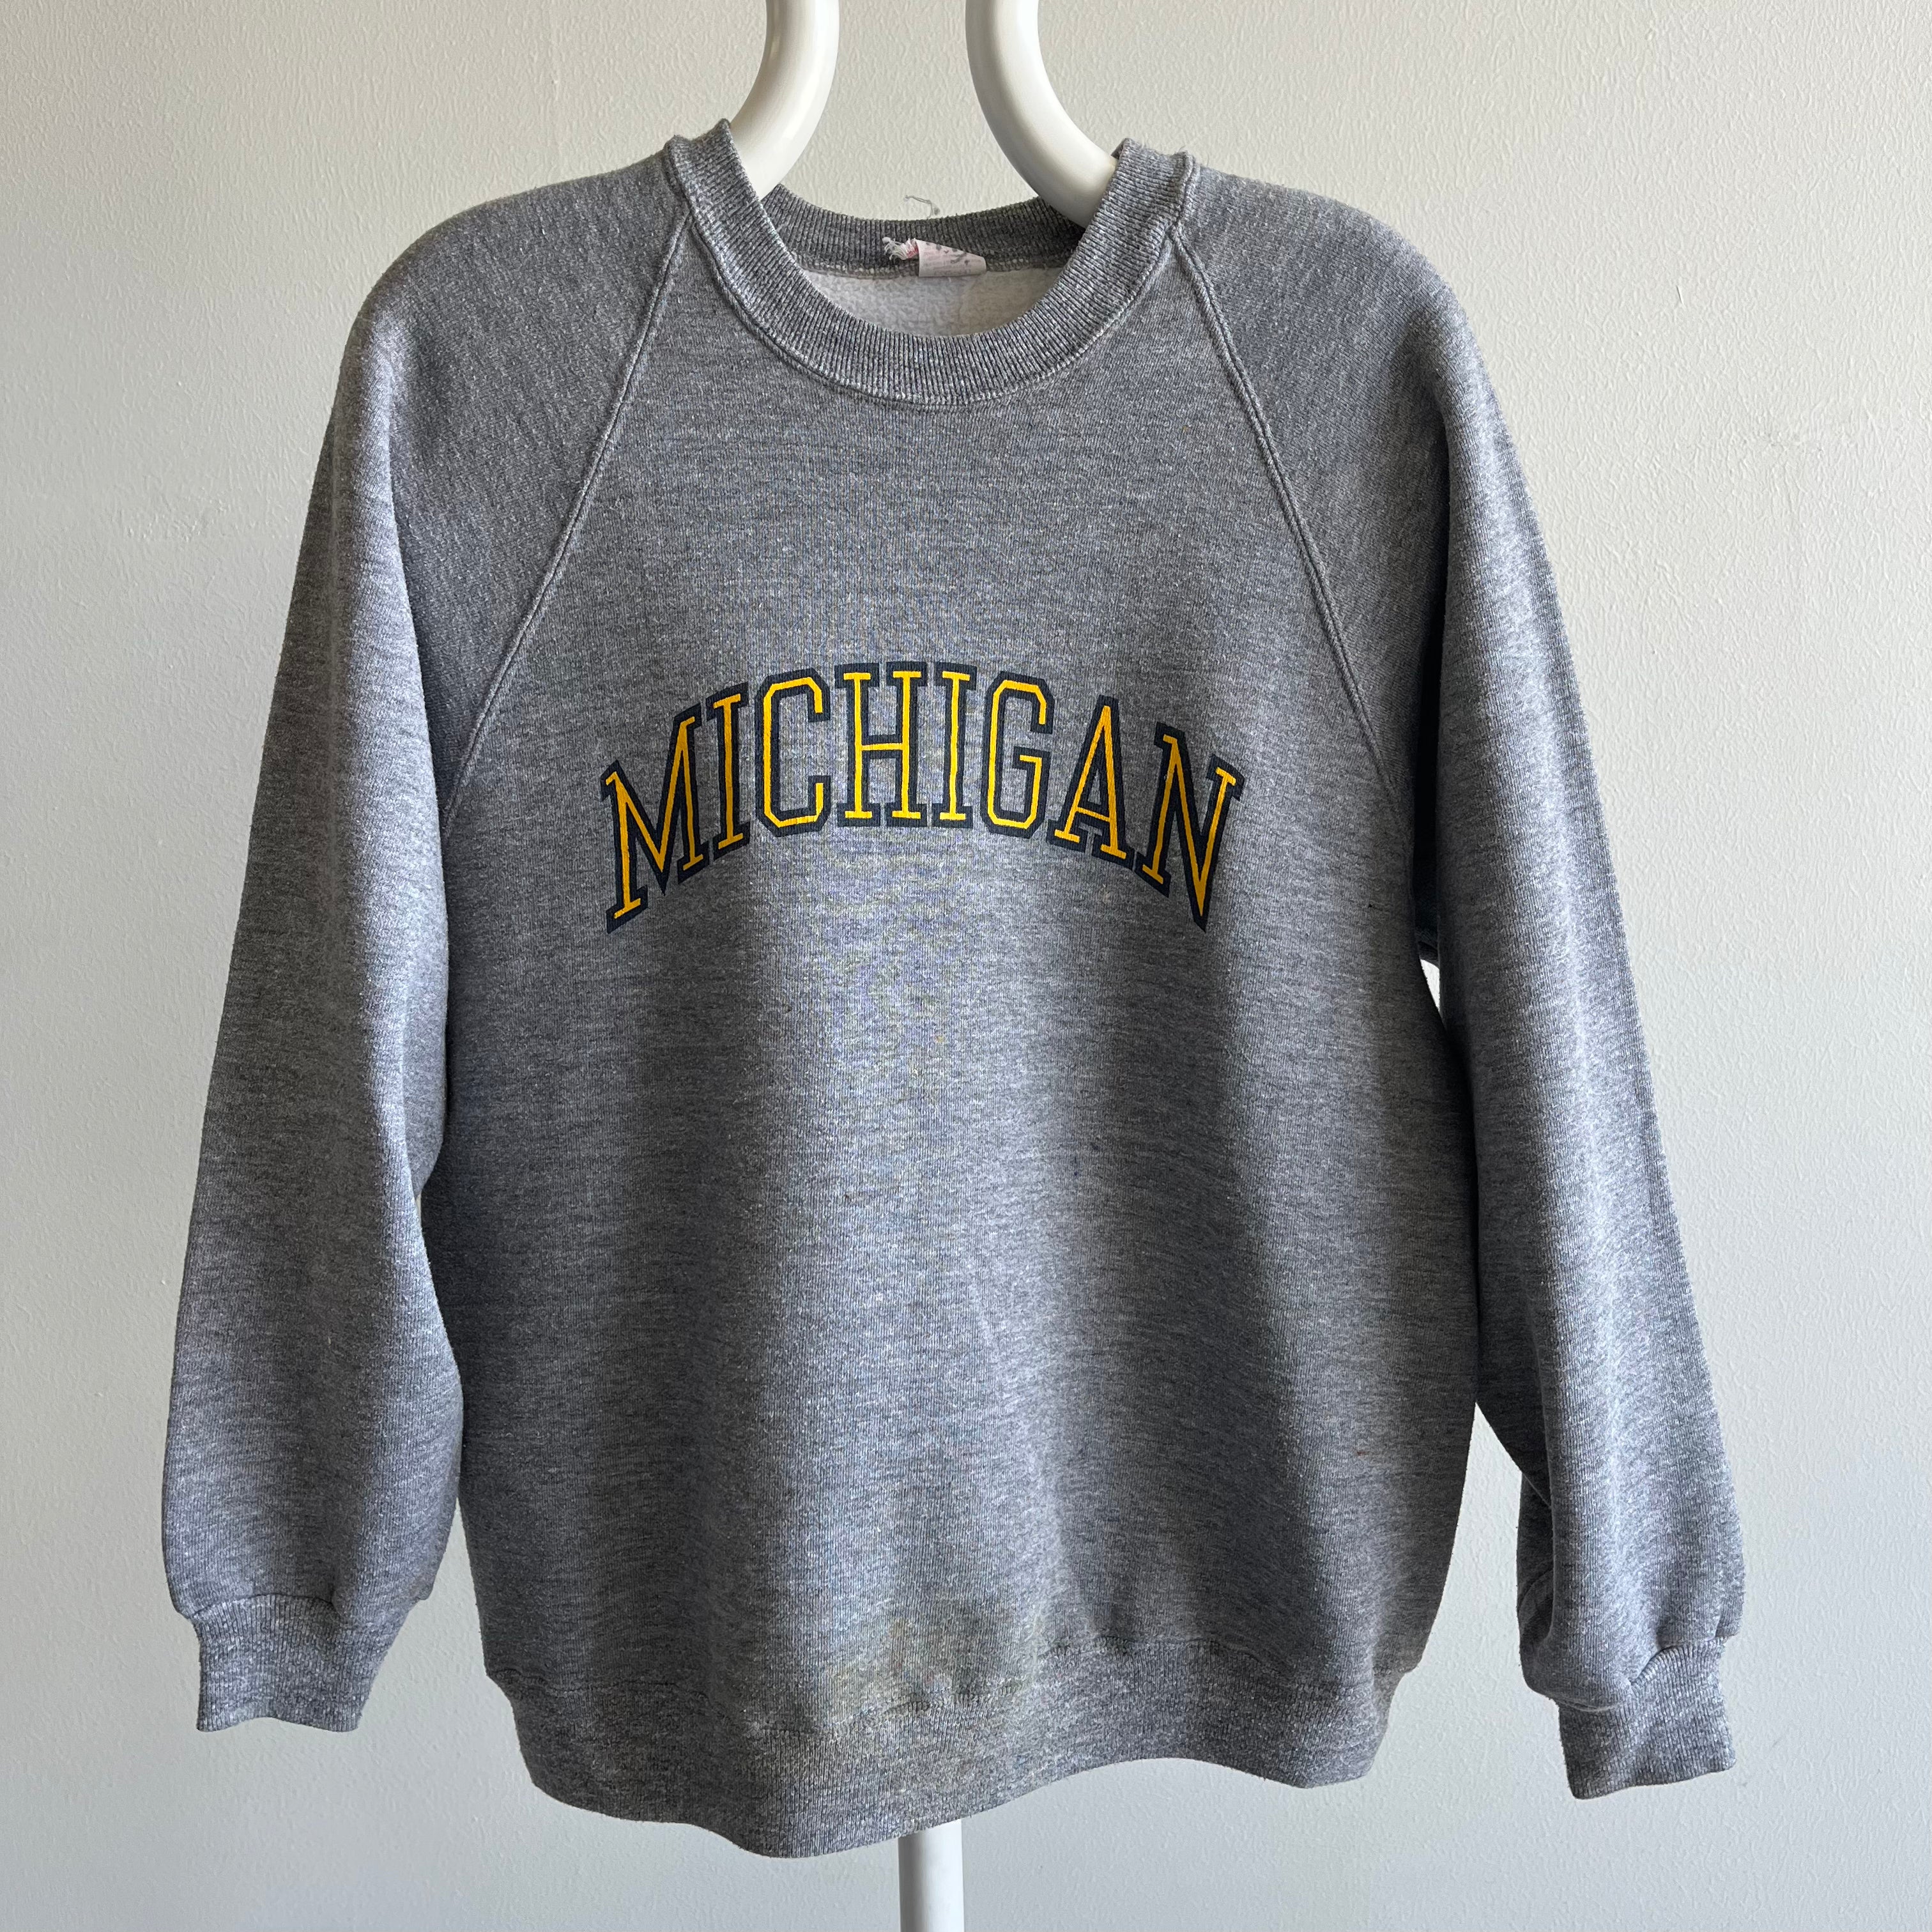 1970/80s Super Stained University Michigan Sweatshirt by Wolf